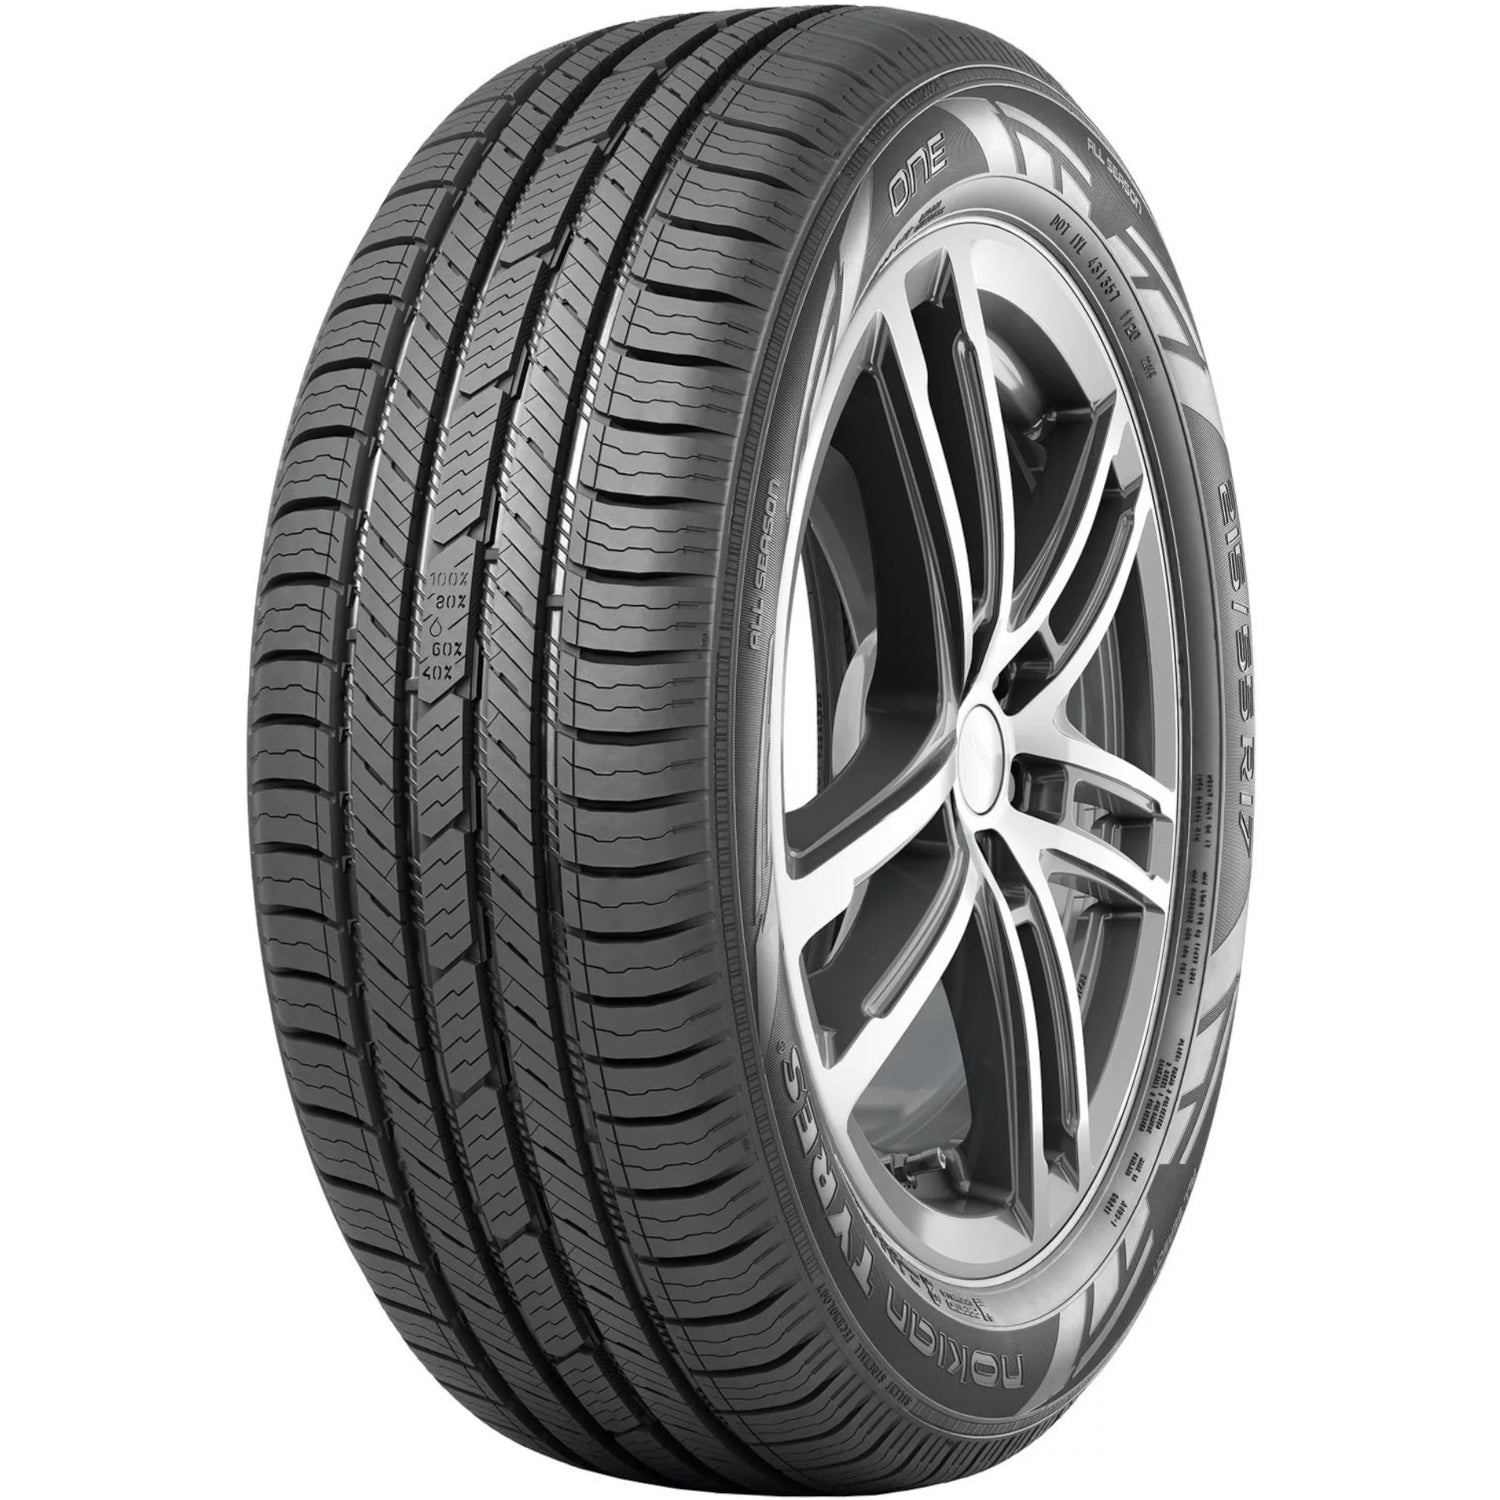 NOKIAN ONE 225/55R19 (28.8X8.9R 19) Tires